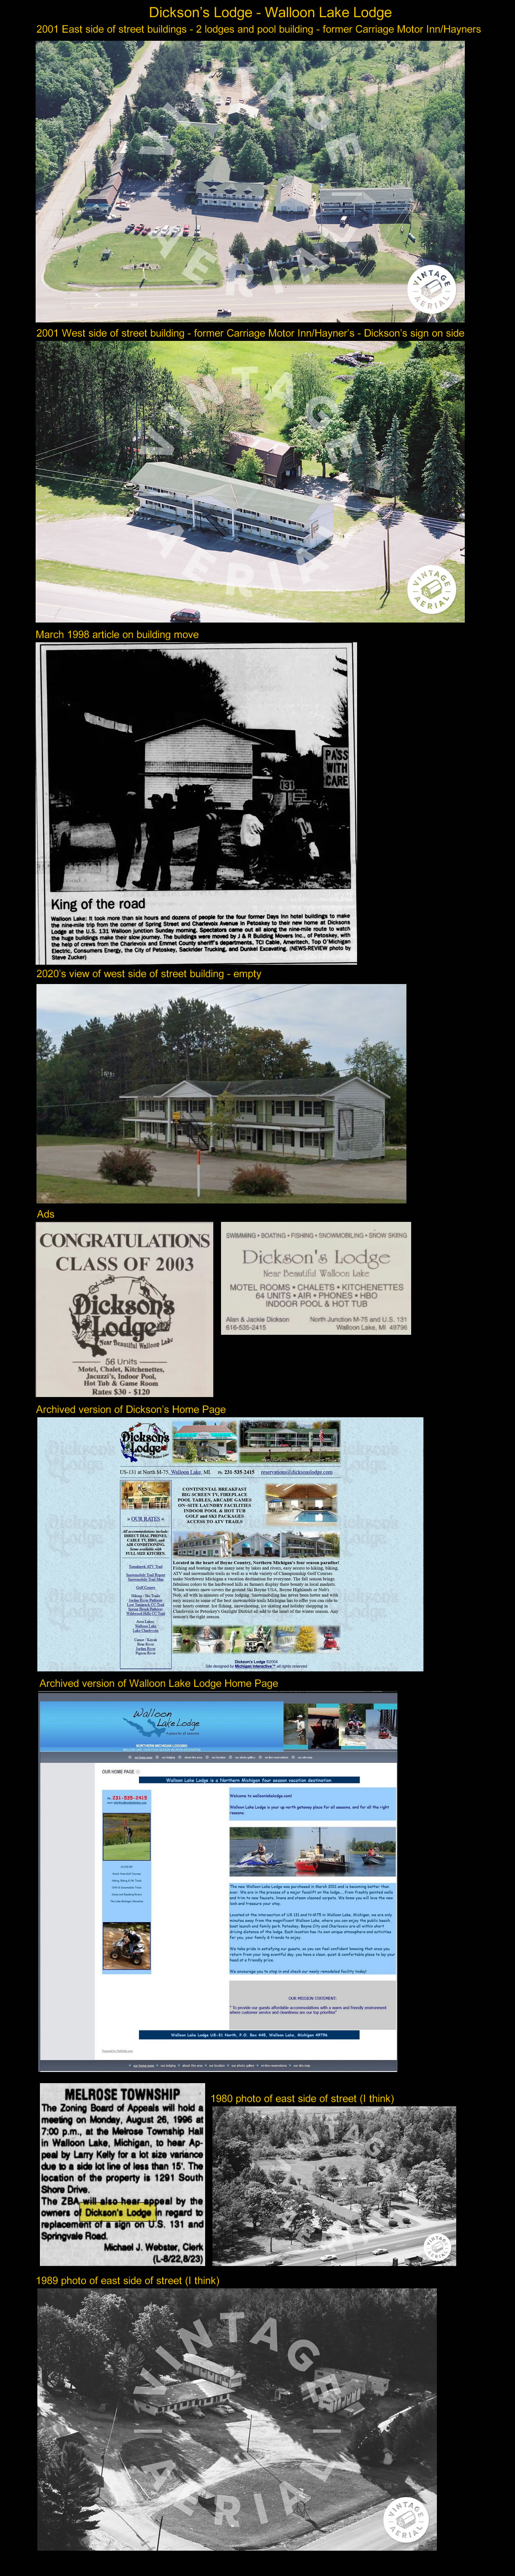 Dicksons Lodge - Walloon Lake Lodge - Dicksons Walloon Lake Lodges Historical Info